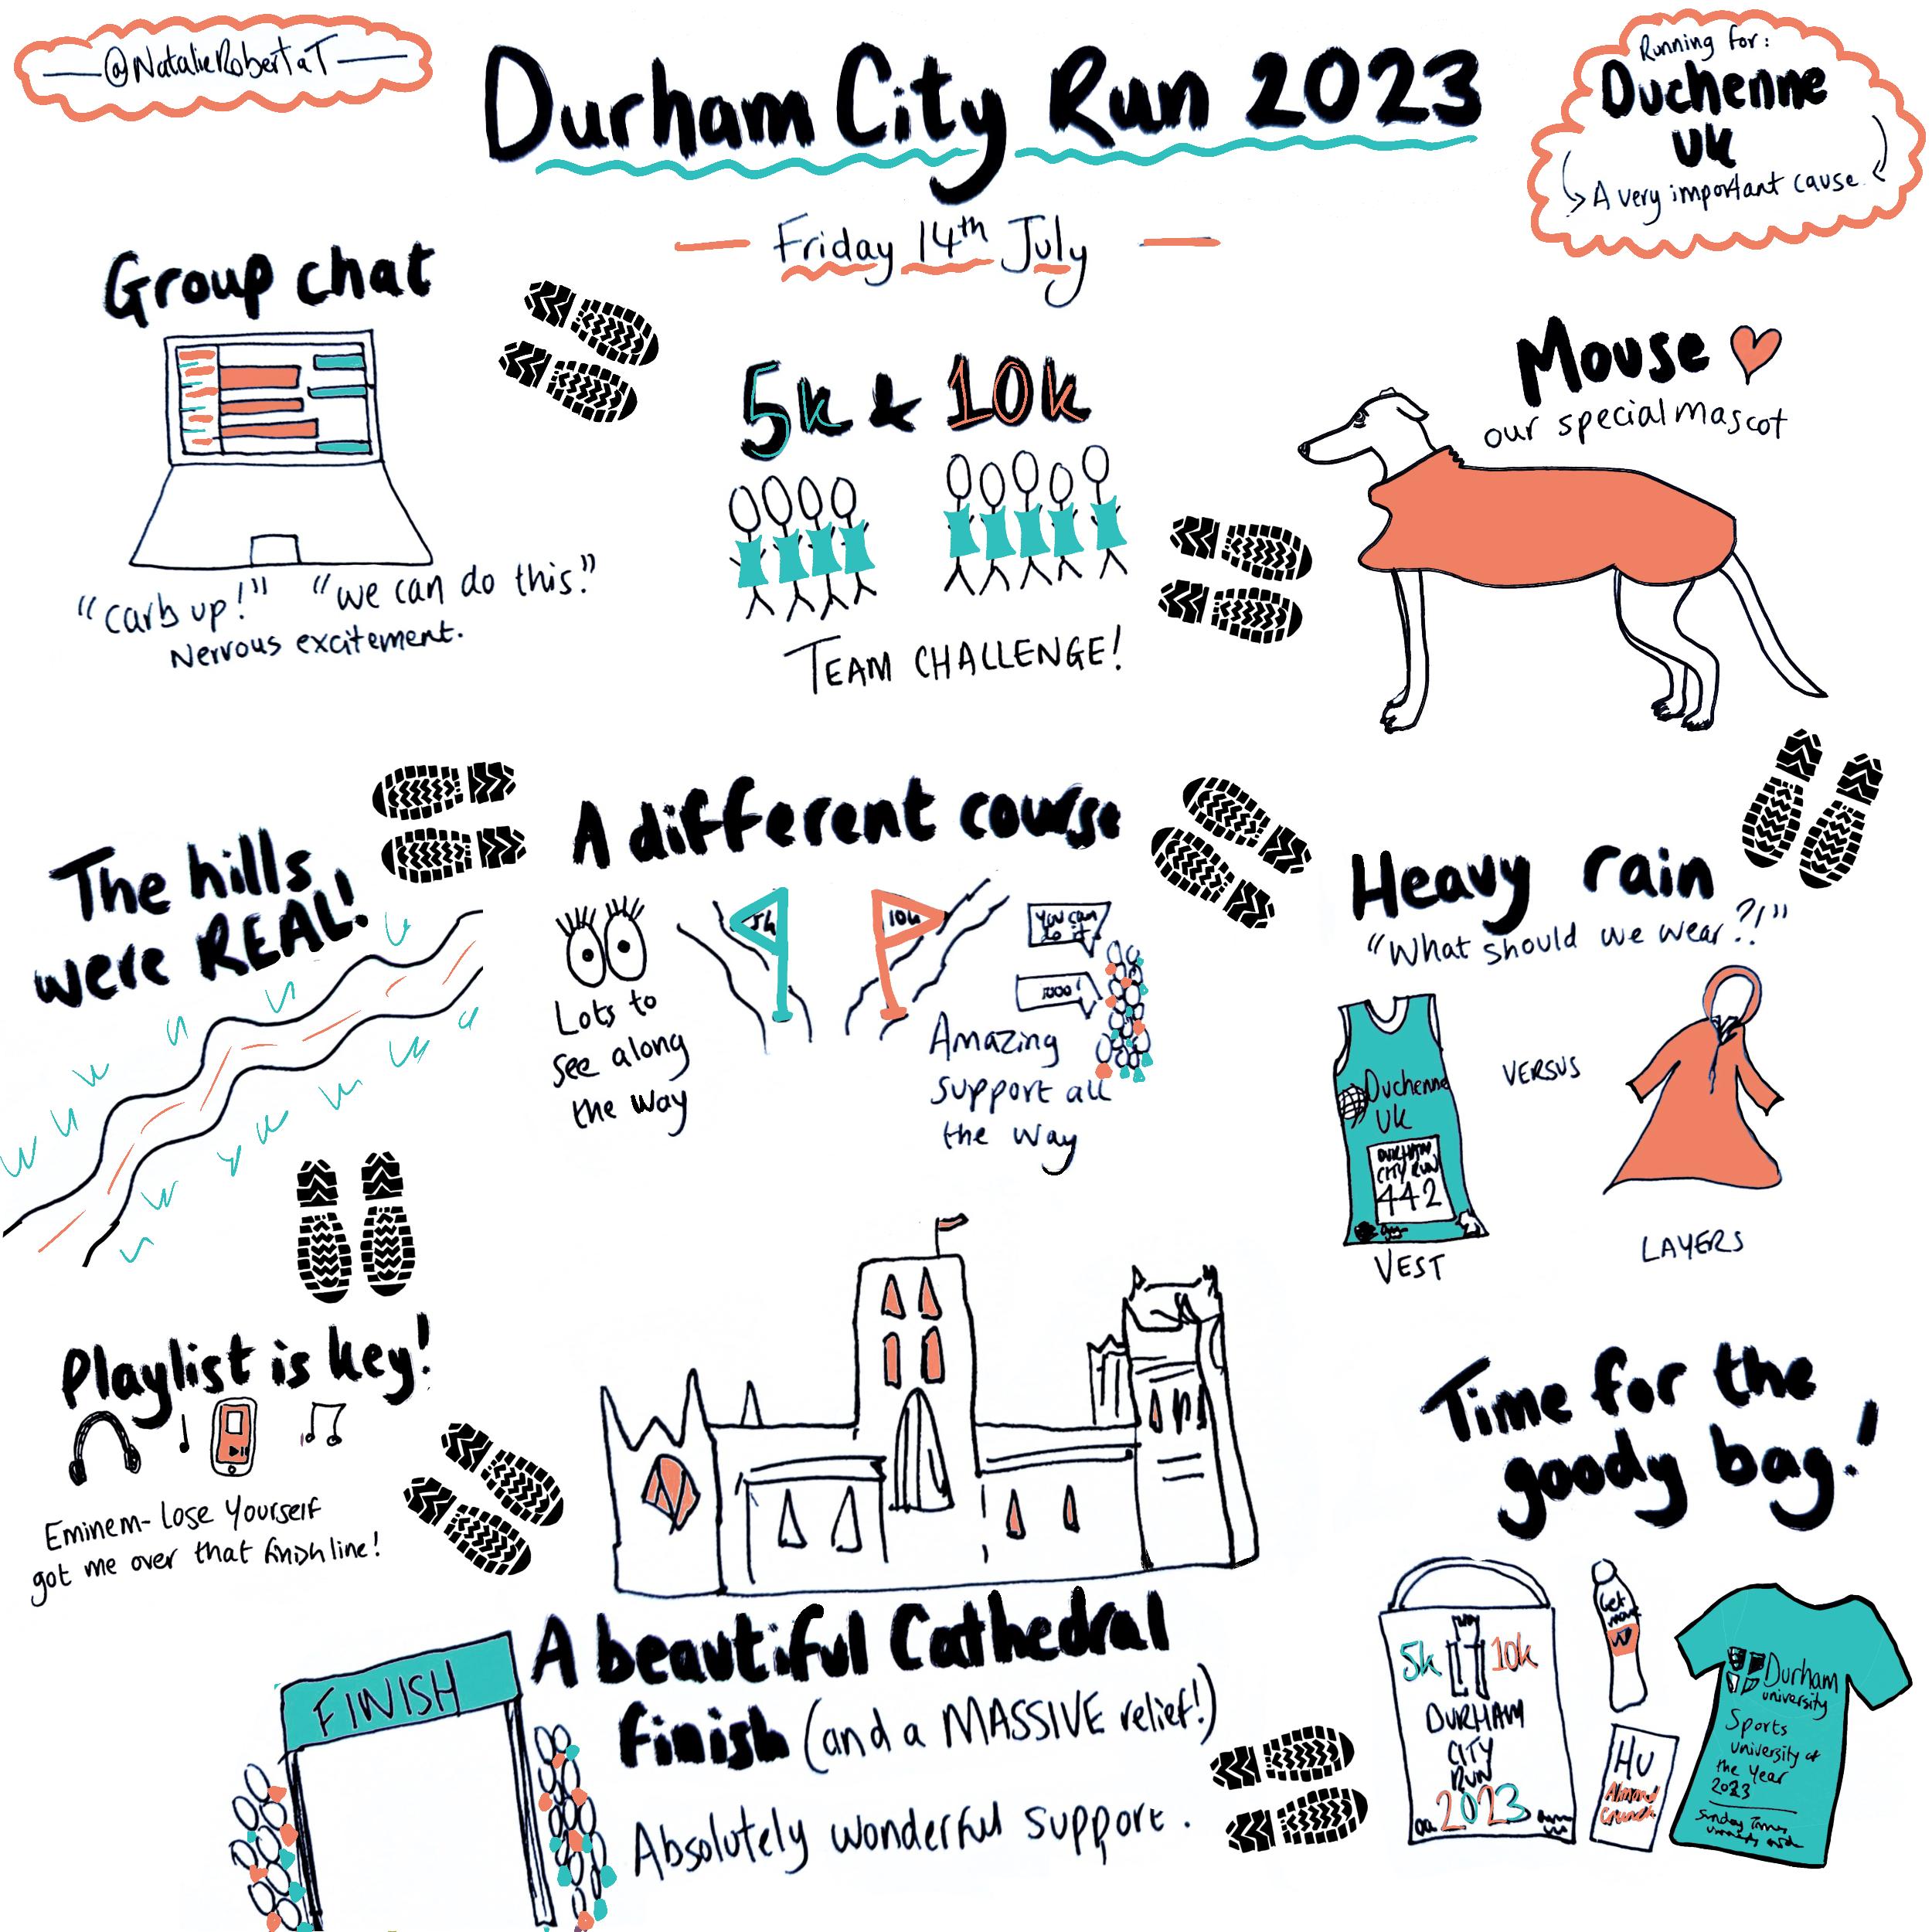 Sketchnote of Durham City Run Festival 2023 by Natalie